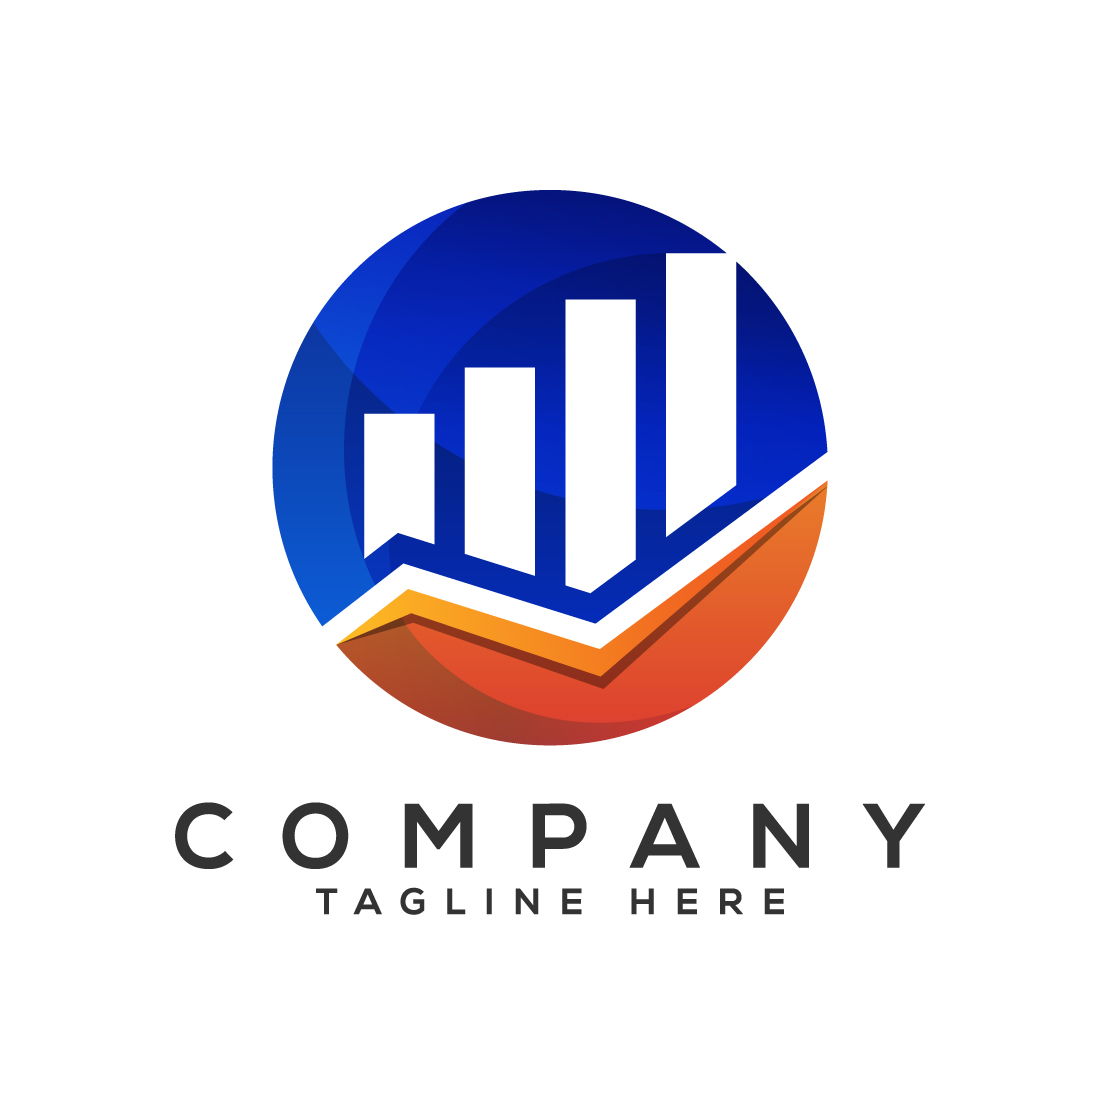 Accounting financial gradient logo, Financial Advisors logo design vector preview image.